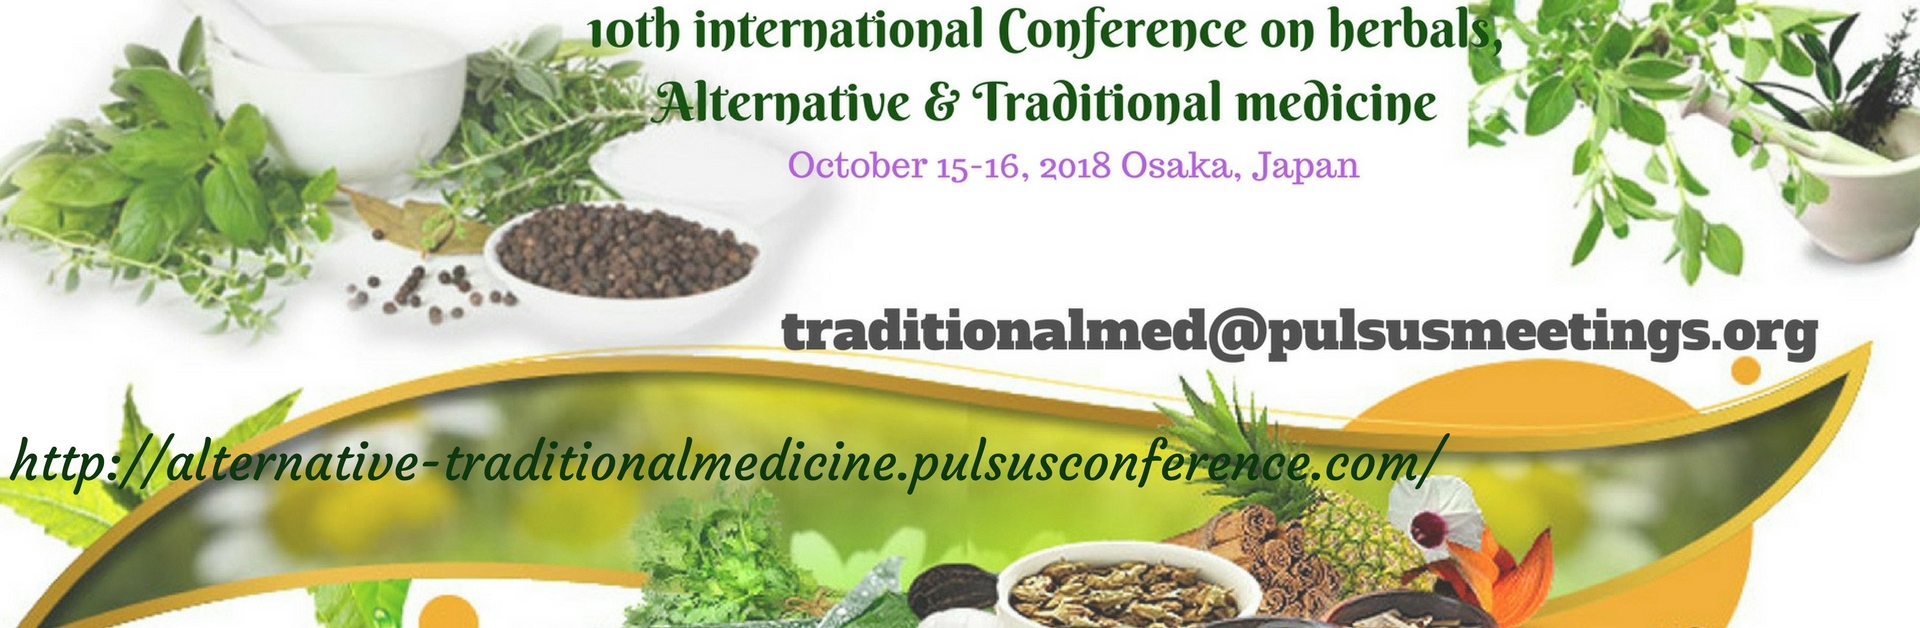 Alternative, Traditional Medicine, Herbal, International Conference, Japan